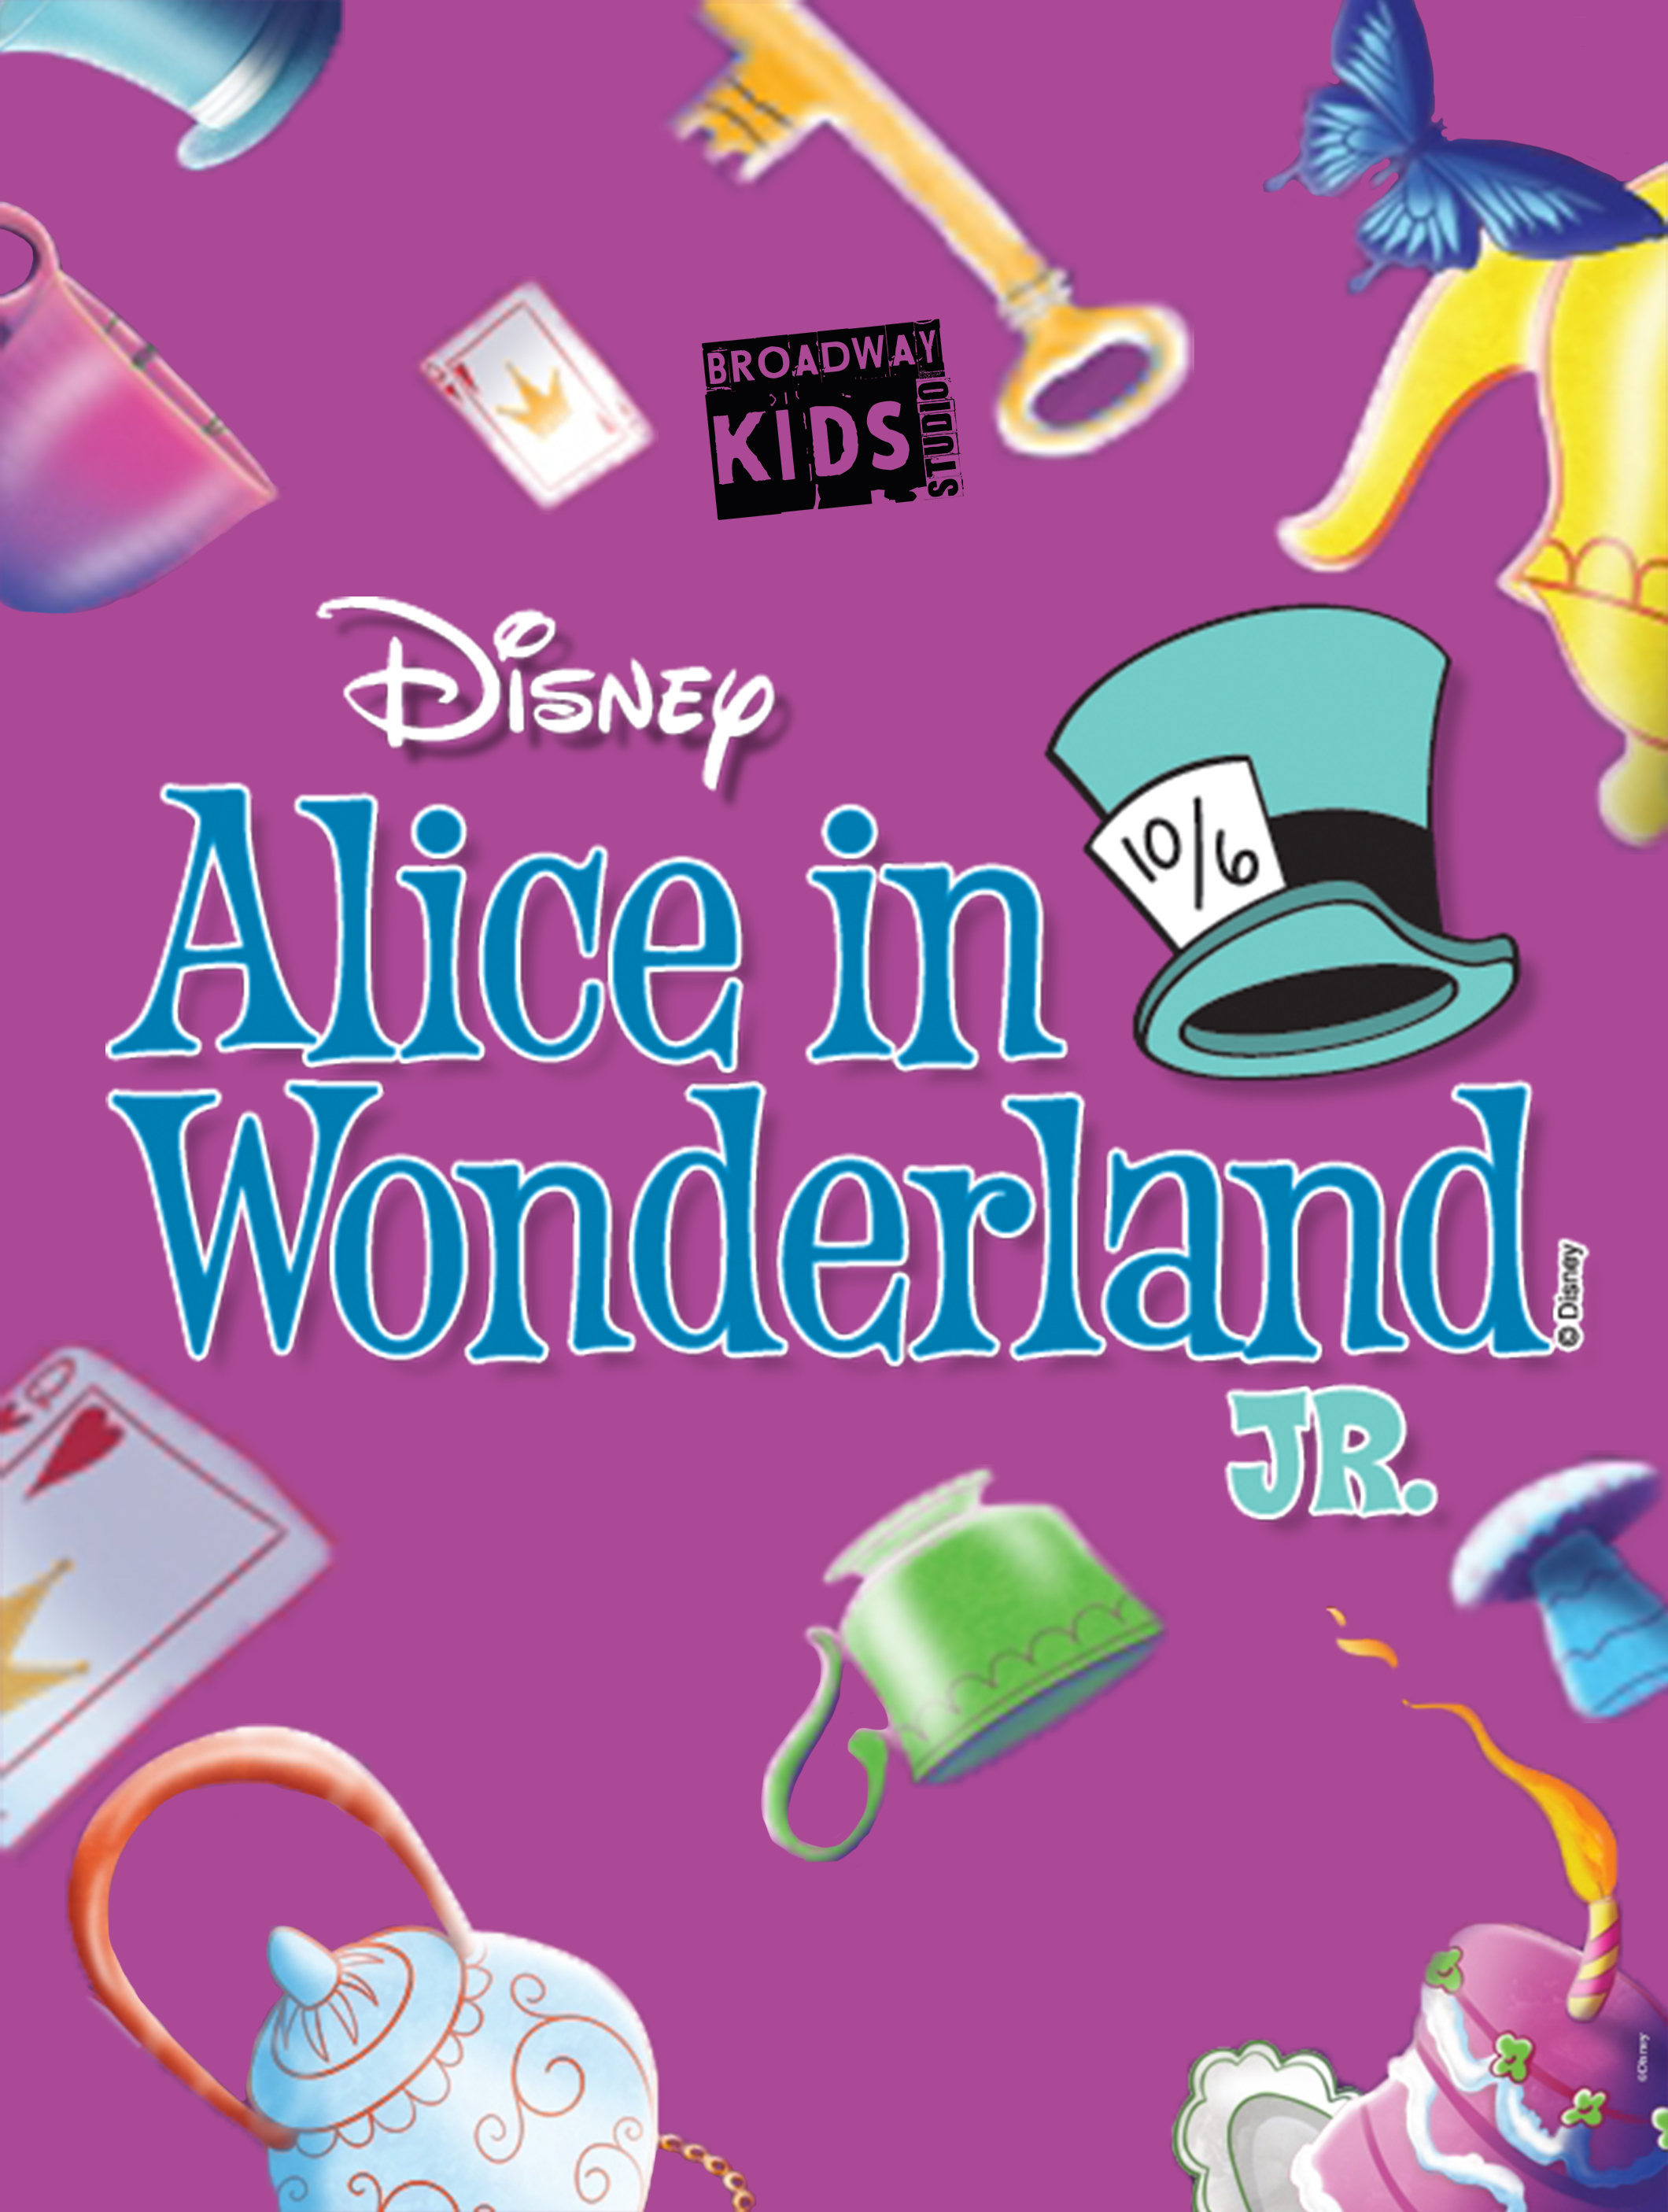 https://www.playbillder.com/static/productions/Broadway_Kids_Studio/2019/Disney_s_Alice_in_Wonderland_JR_/images/Alice_Cover_126_.jpg